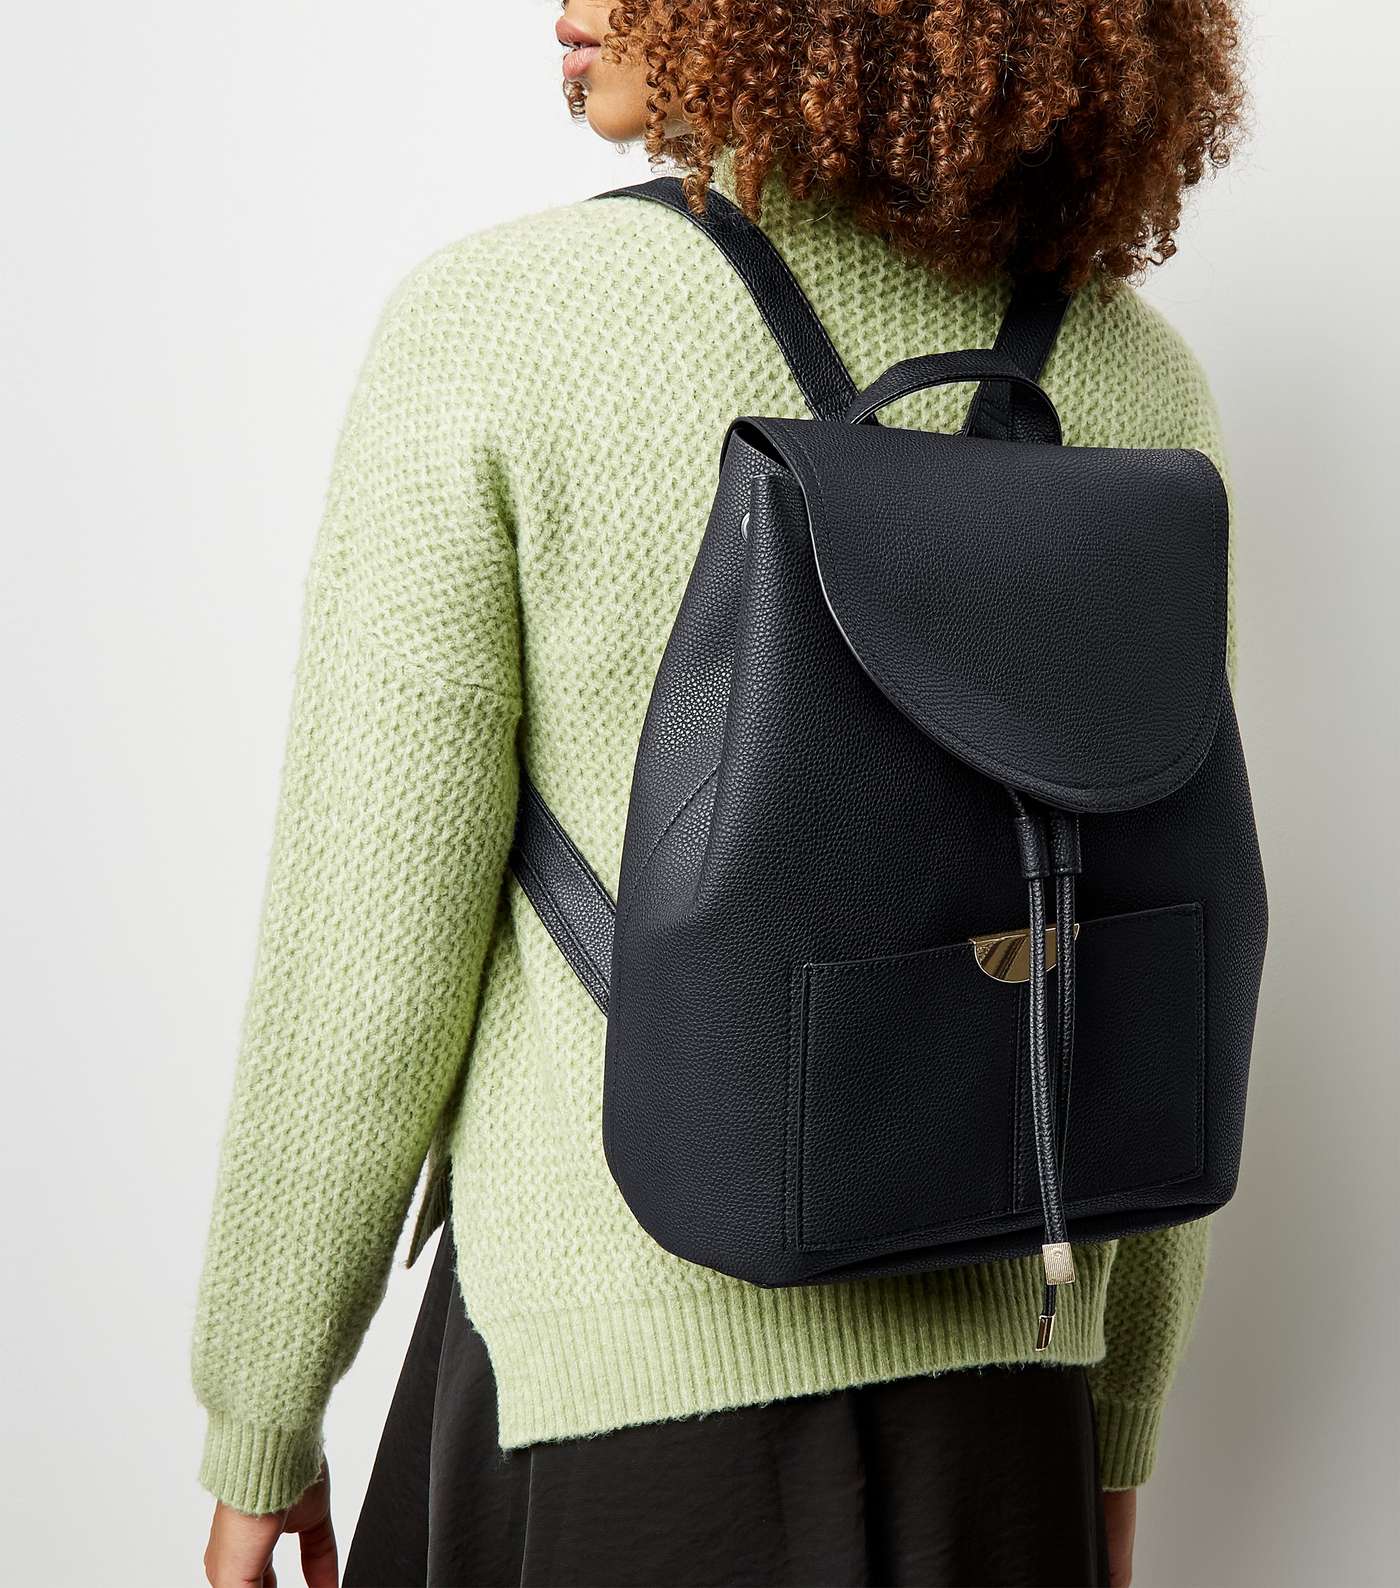 Black Leather-Look Drawstring Backpack Image 2